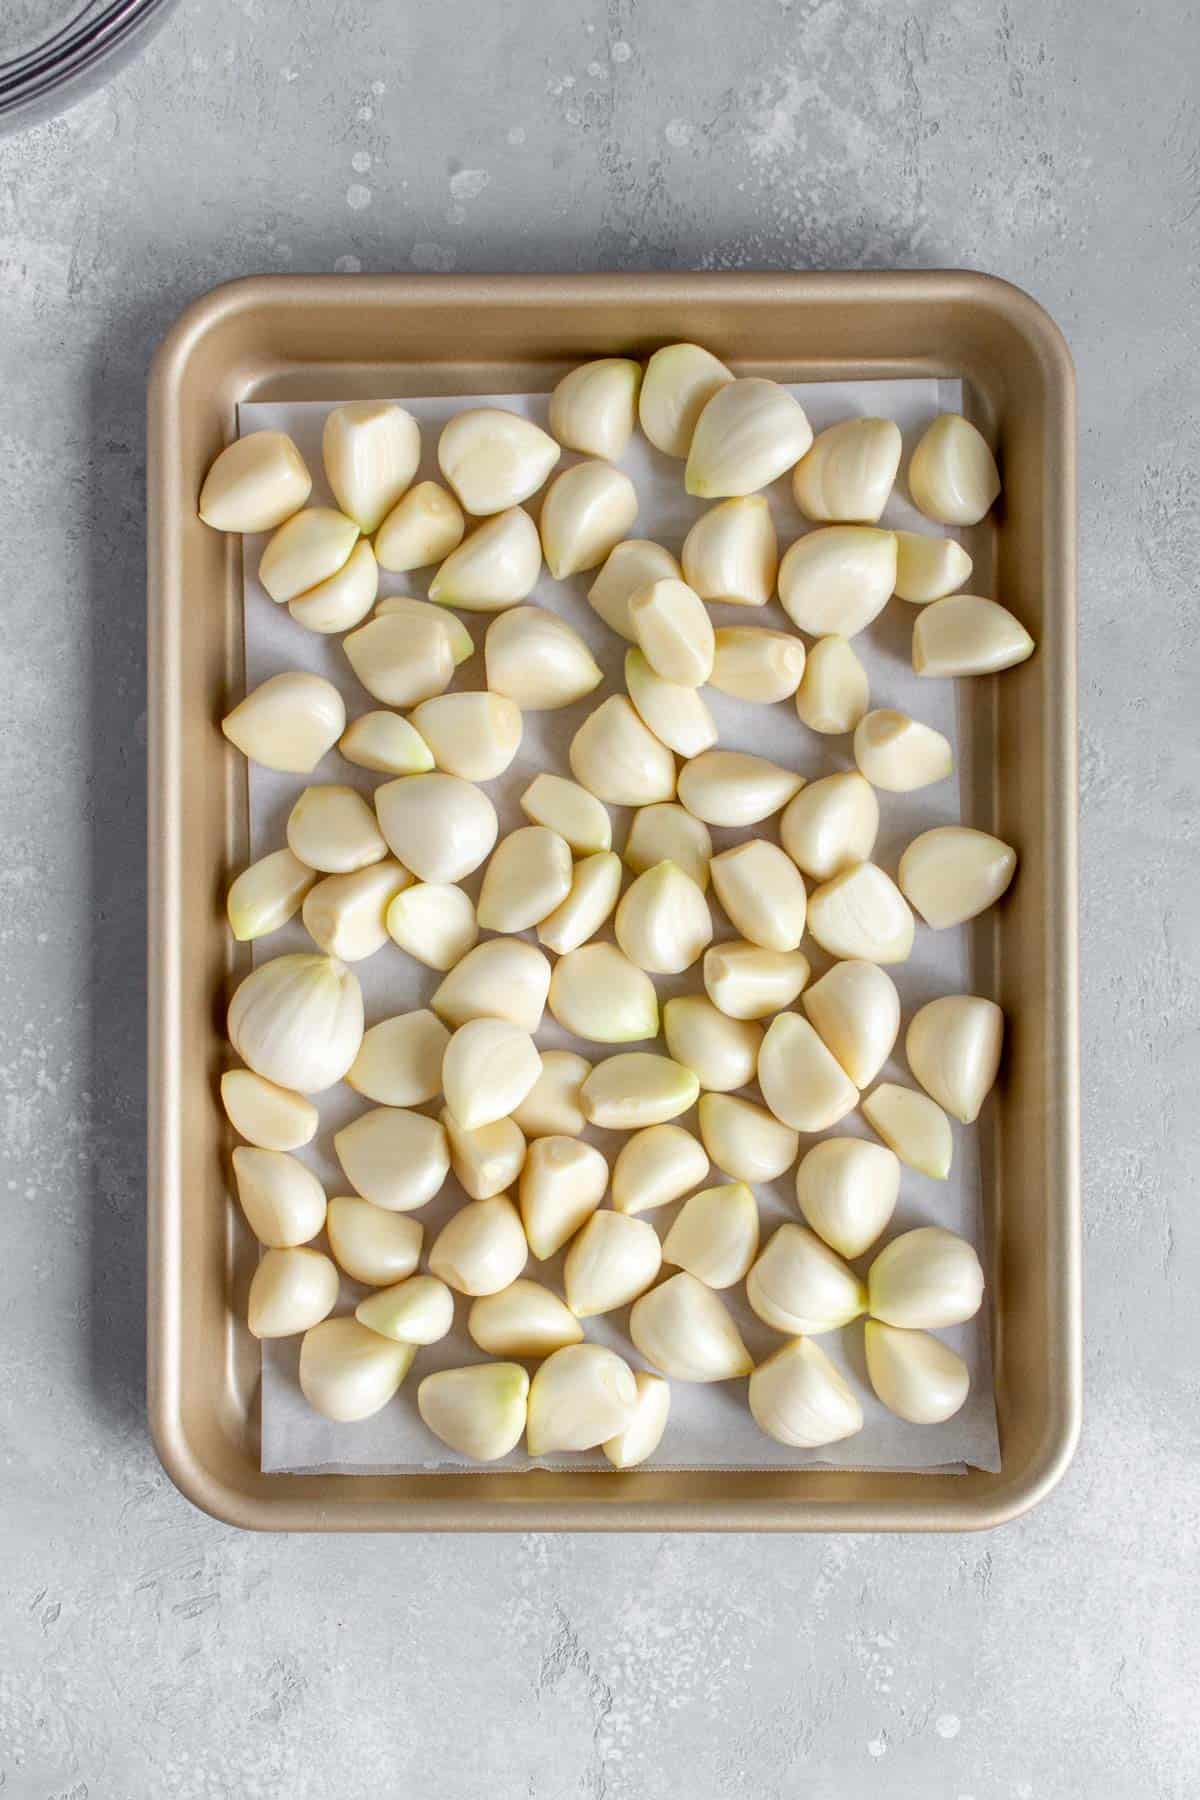 Garlic cloves on a lined sheet pan.